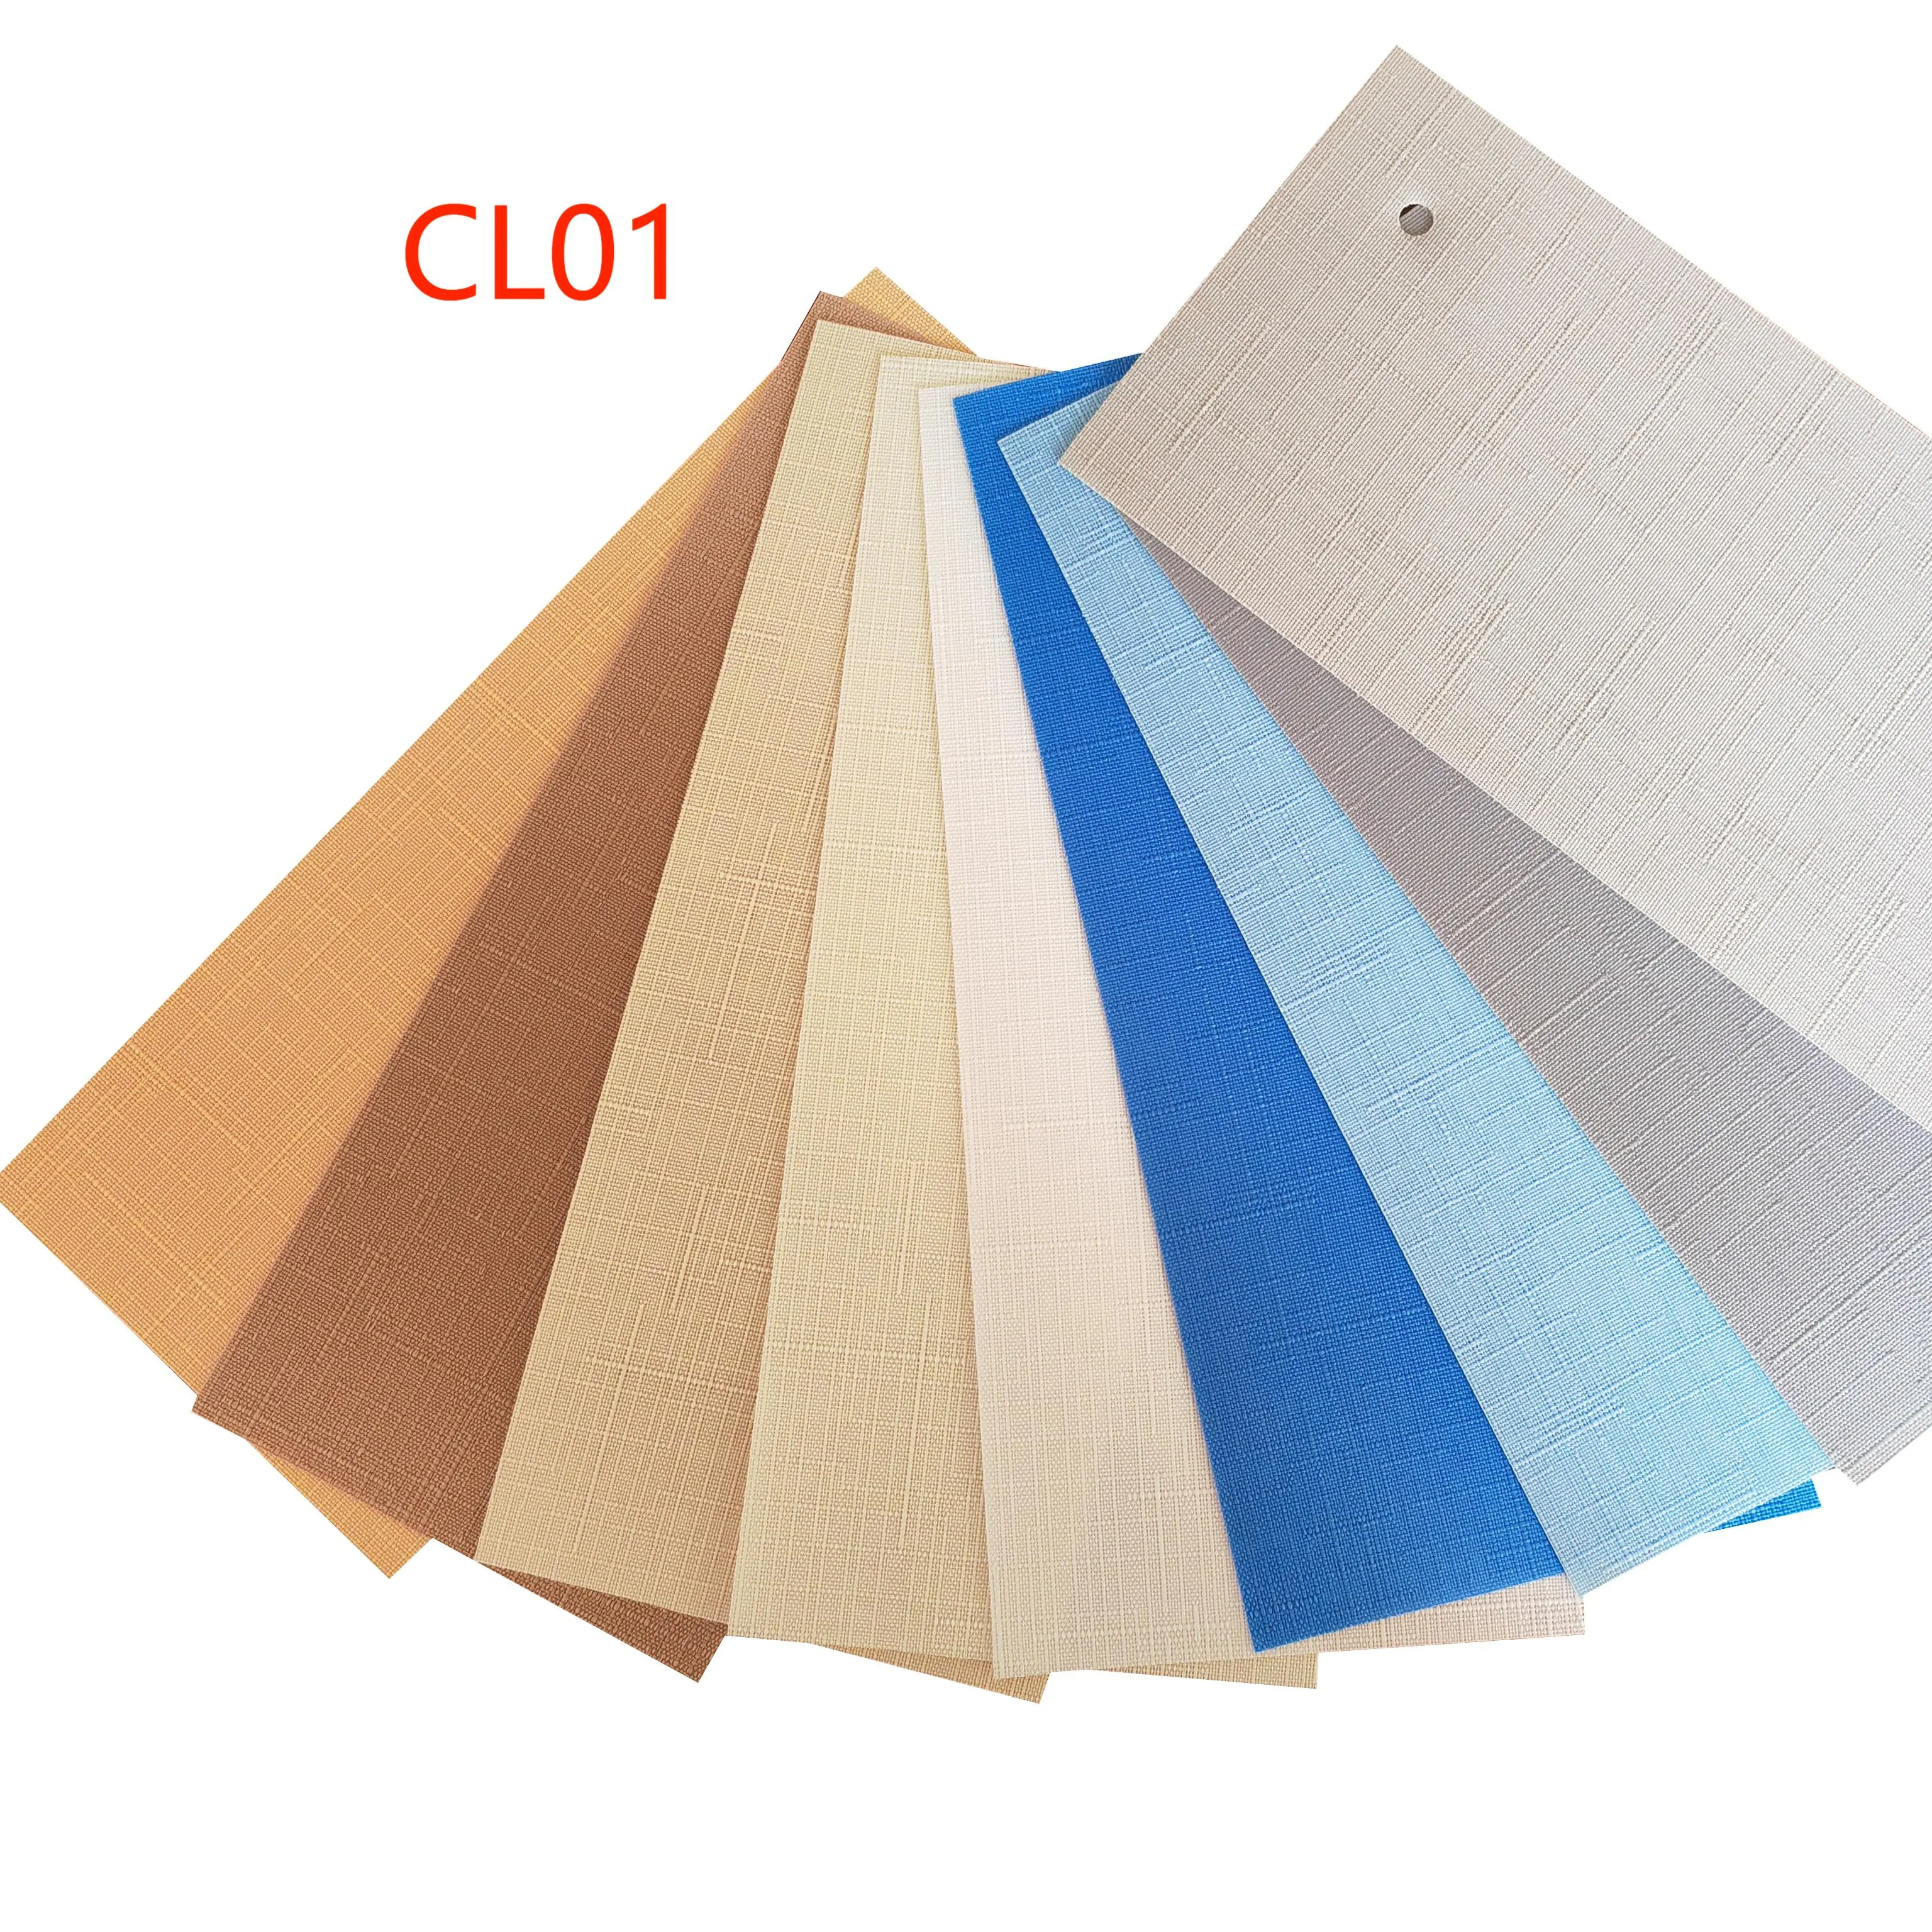 CL01 סדרת 89MM לתריסי בד עם רבים צבעים שקוף בד ההאפלה רולר אנכי חלון עיוור